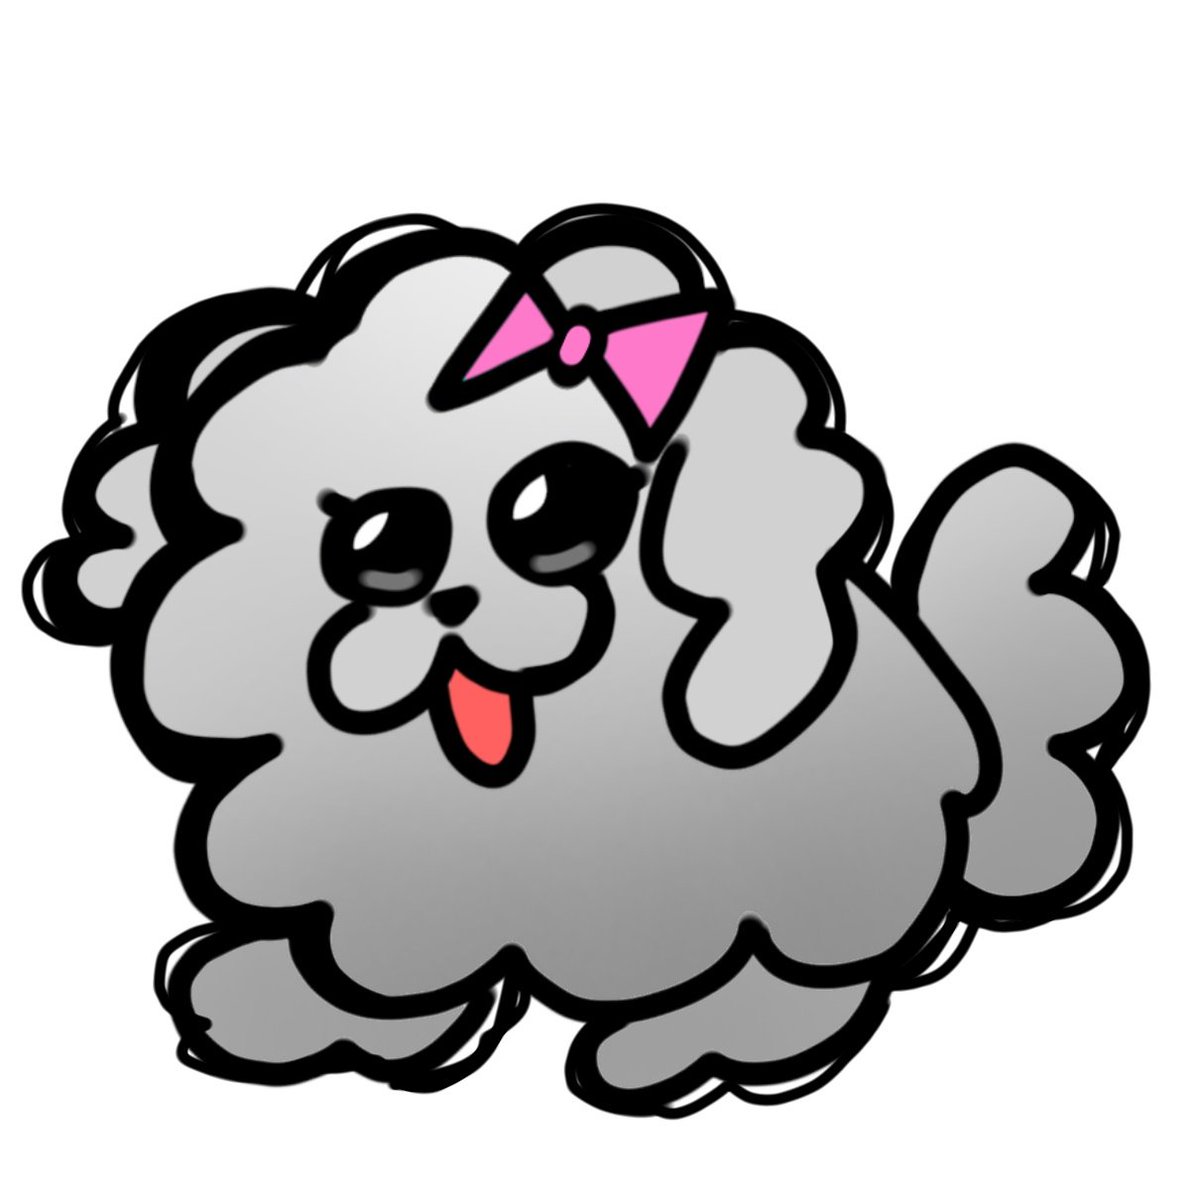 FluffyDog
(Fran's pet)
(Inspiration: Eggdog)
#SMG4 #SMG4Oc #Art #Drawing